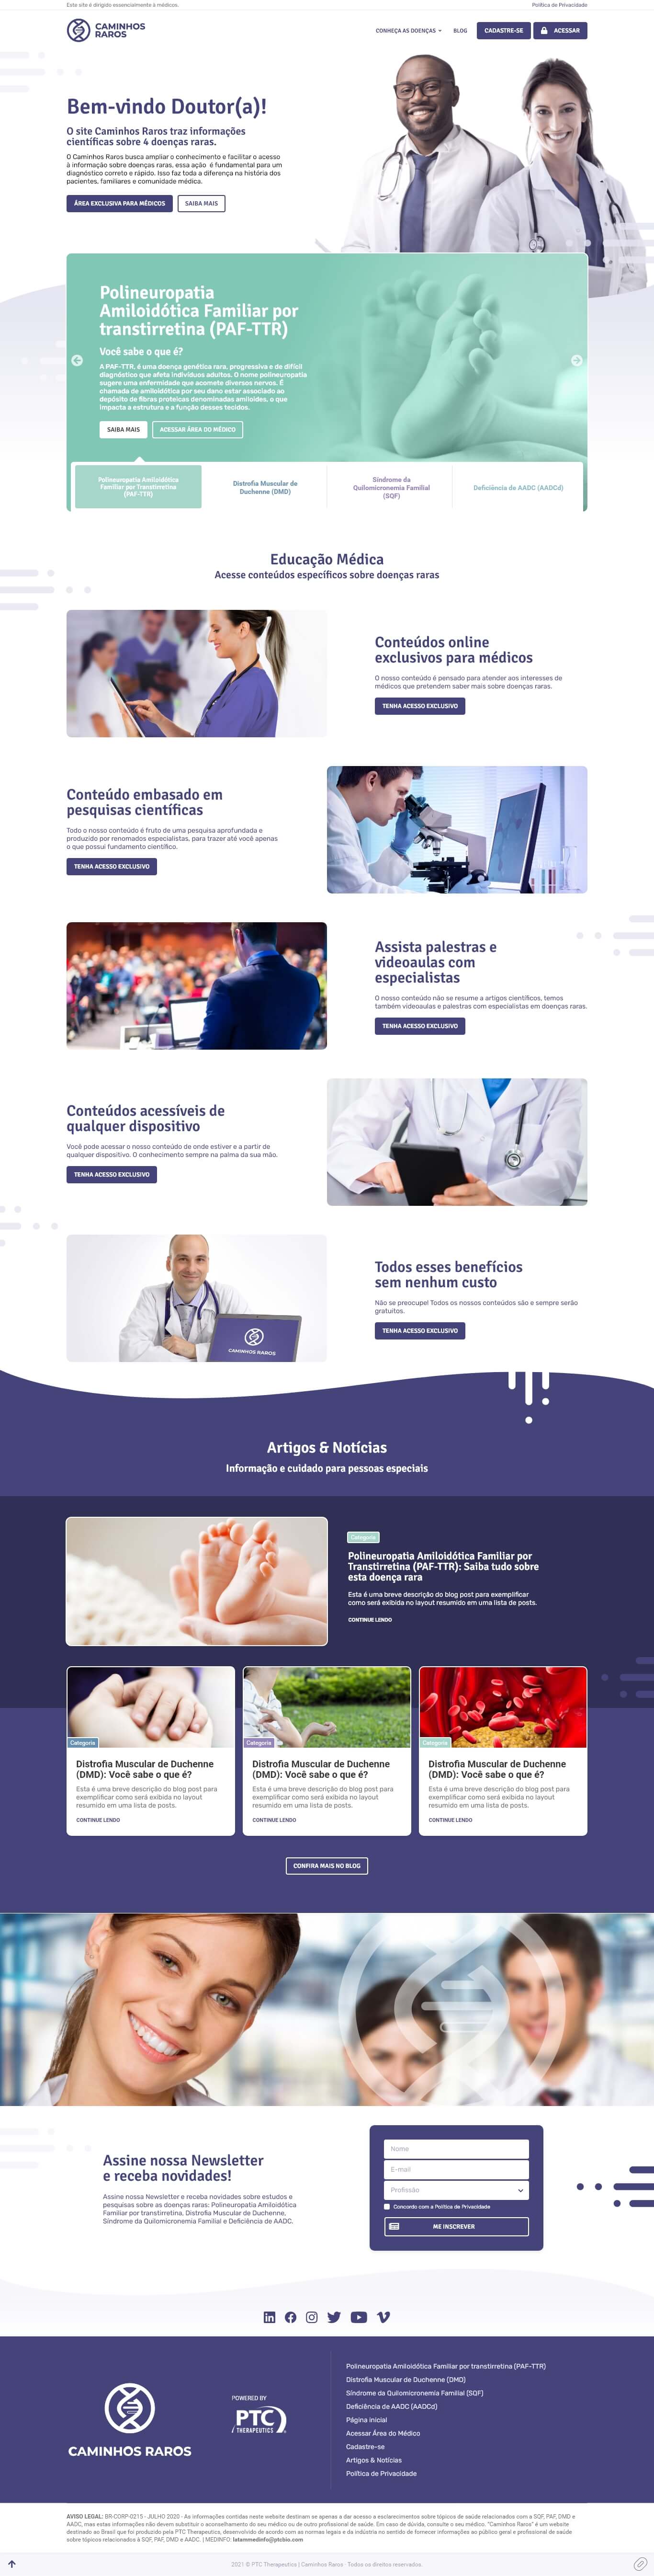 Caminhos Raros (PTC Therapeutics) - Website